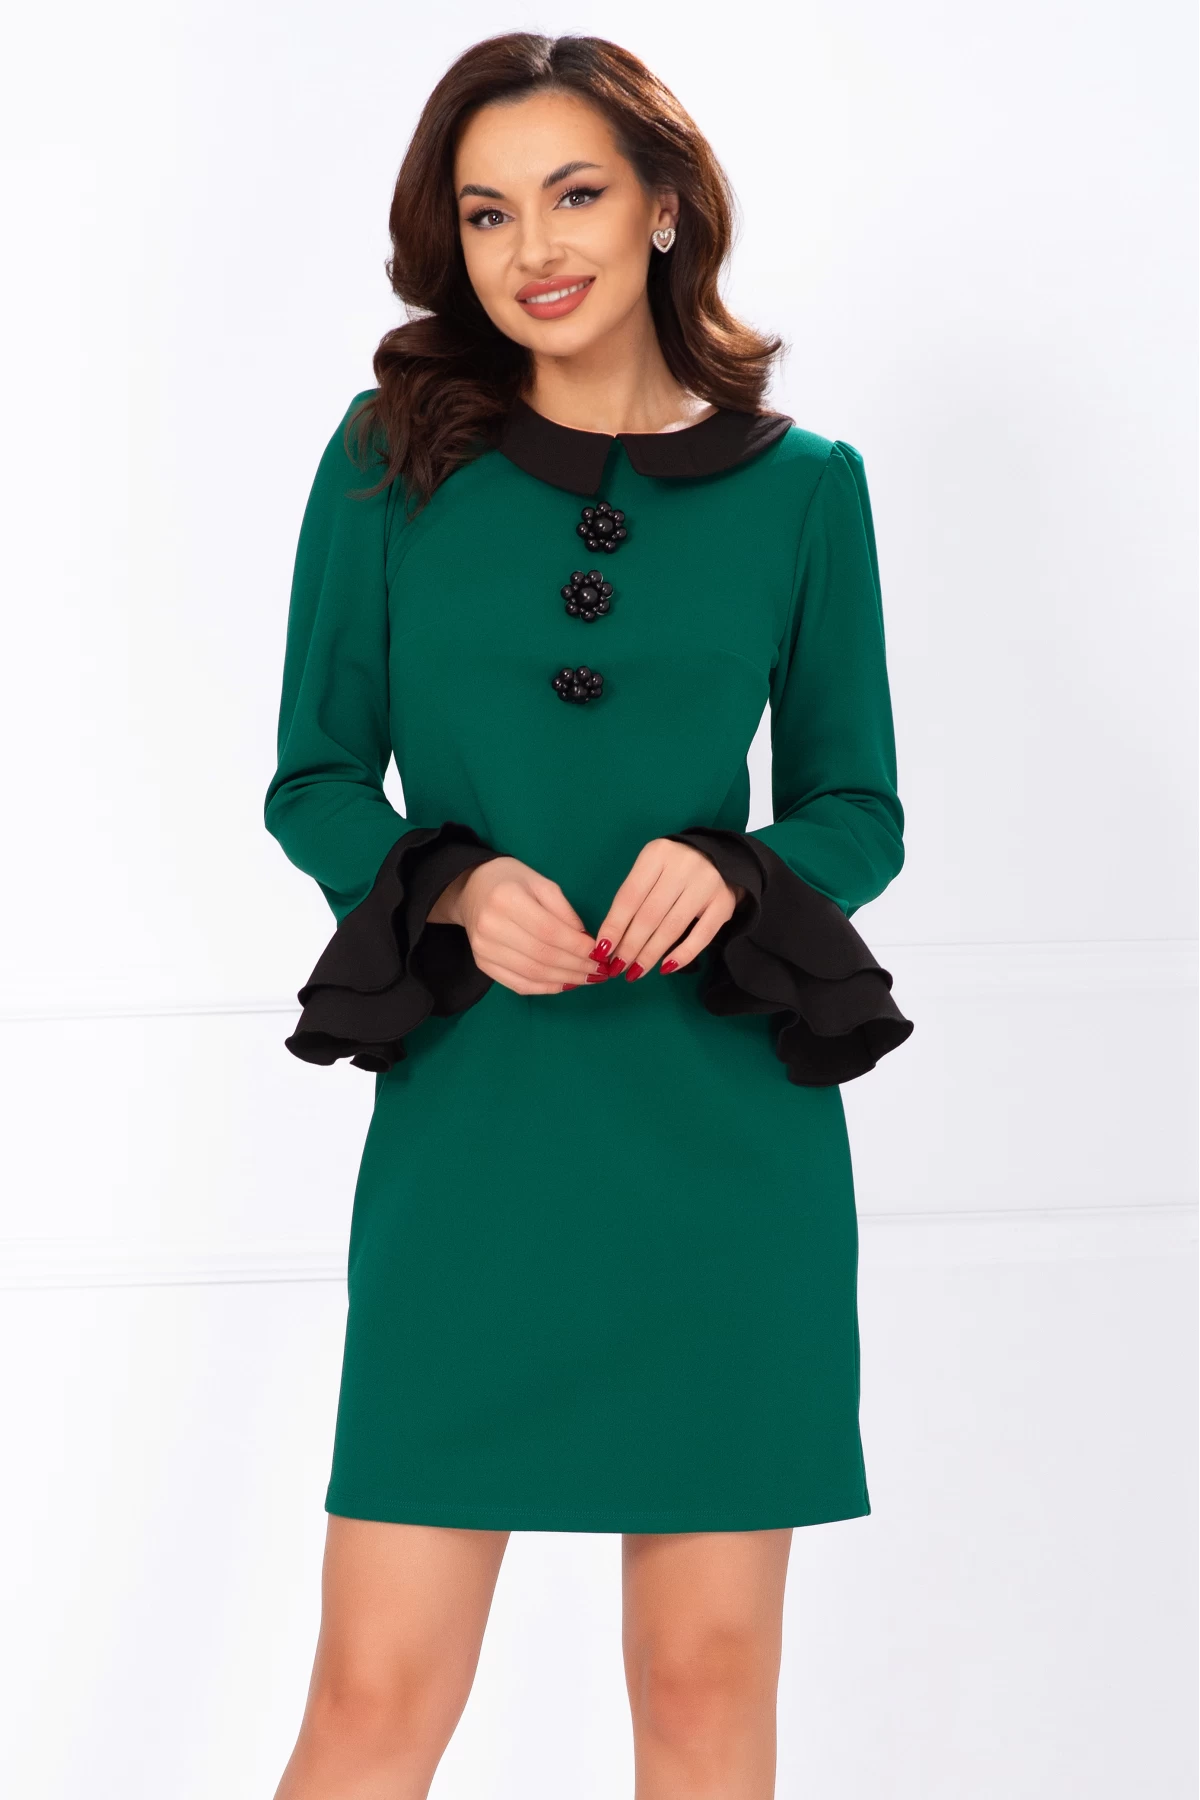 Rochie de zi Ivonne verde cu guler si mansete negre